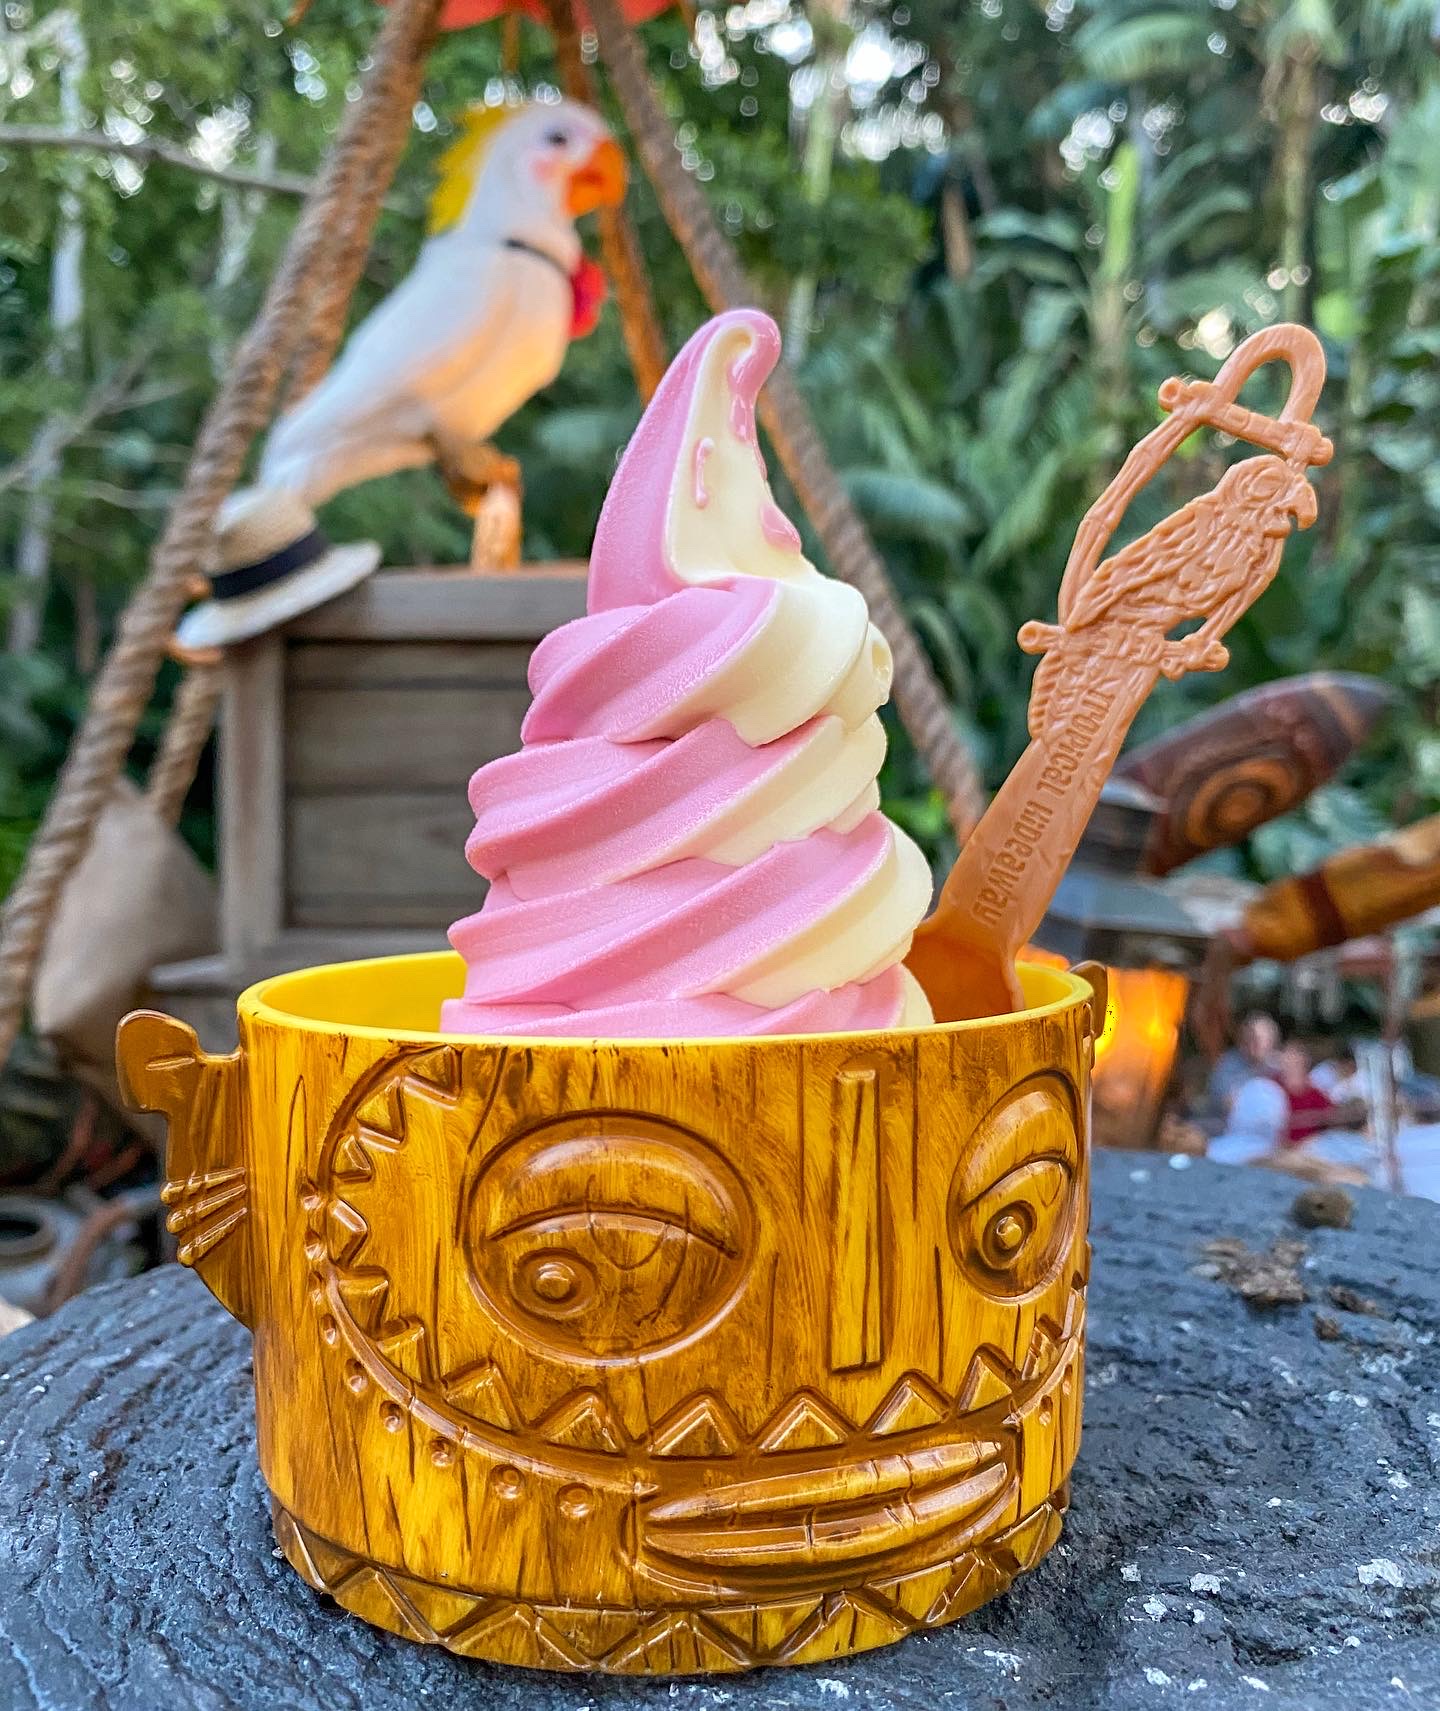 New Stackable Tiki Cups Arrive at Tropical Hideaway in Disneyland